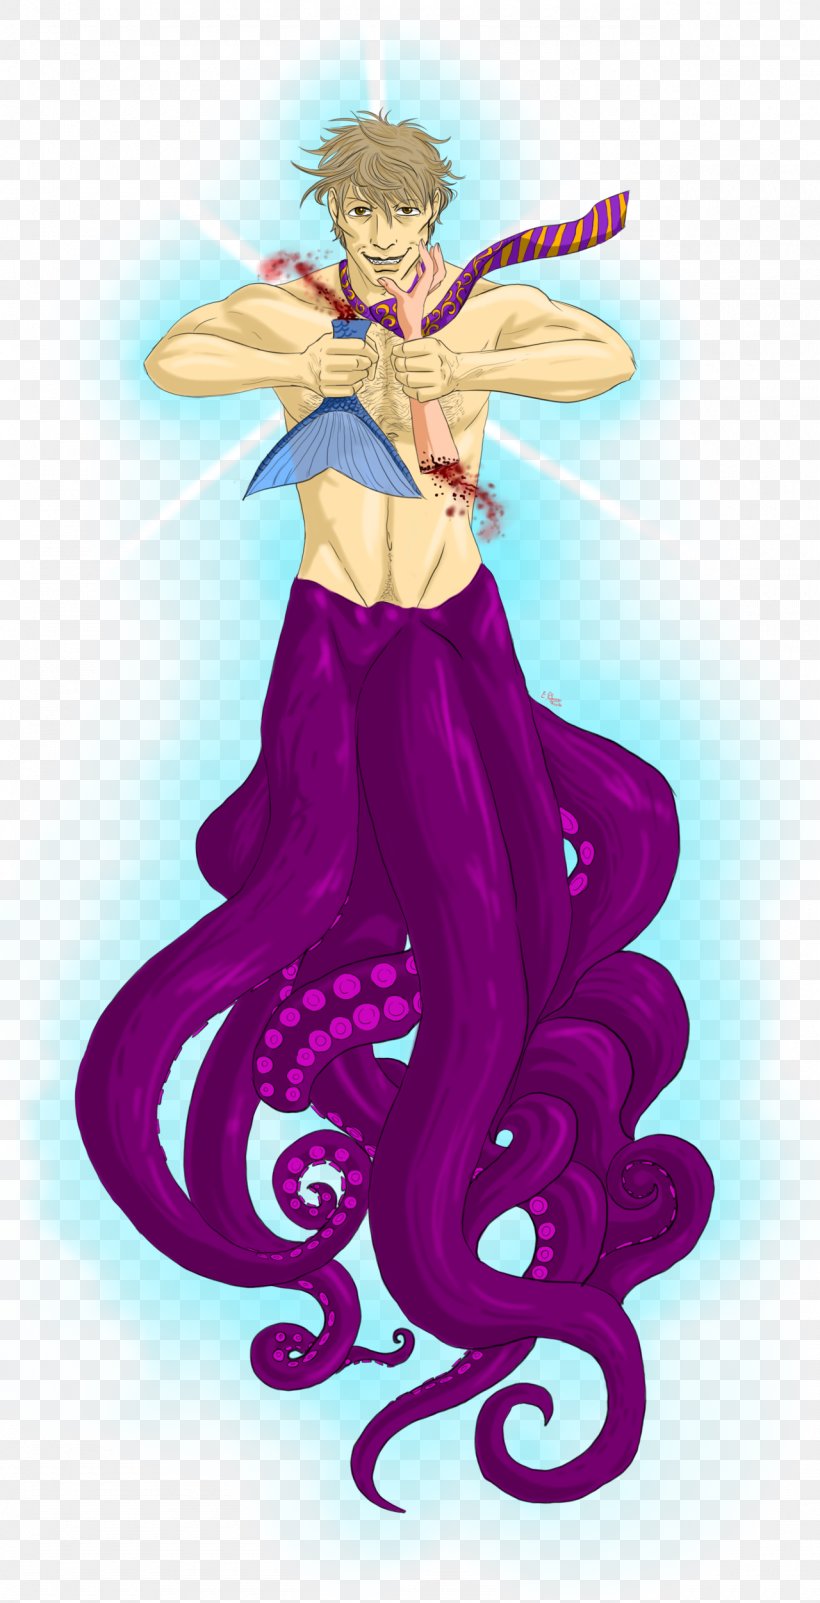 Anime Mermaid  v10  Stable Diffusion LoRA  Civitai